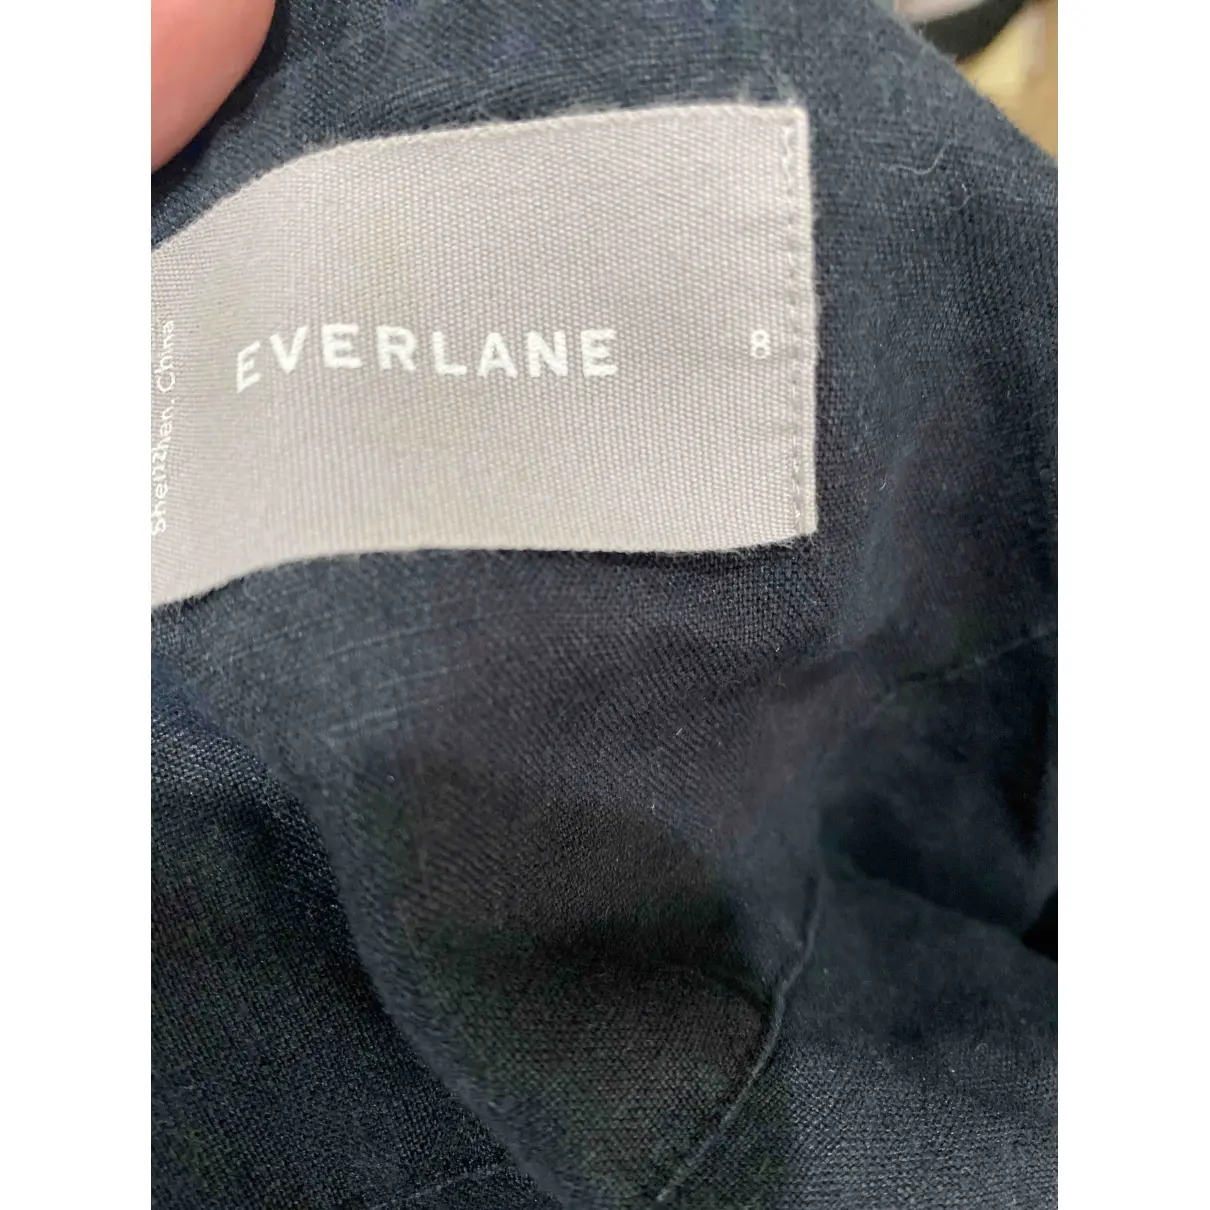 Buy Everlane Linen shirt online